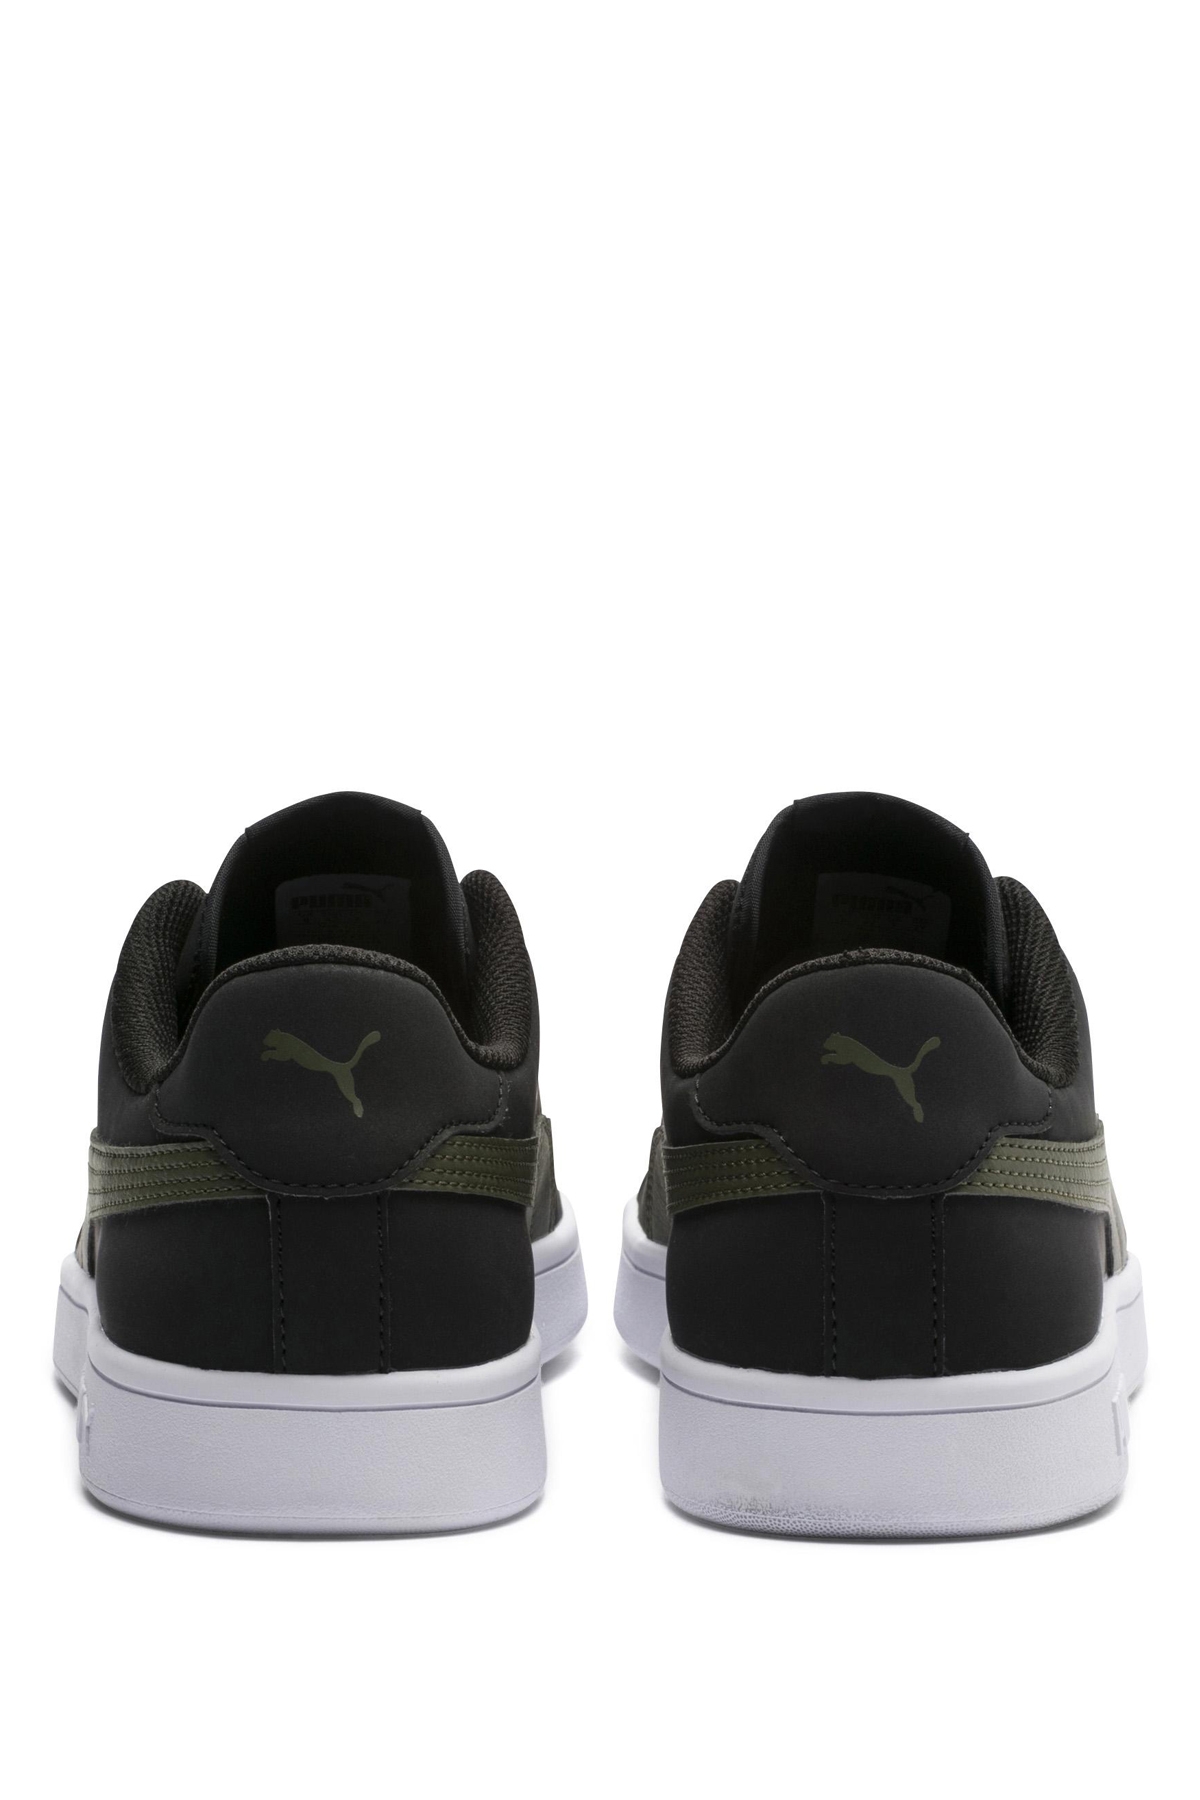 Puma SMASH V2 BUCK Siyah Erkek Sneaker 100352142 | IN Street